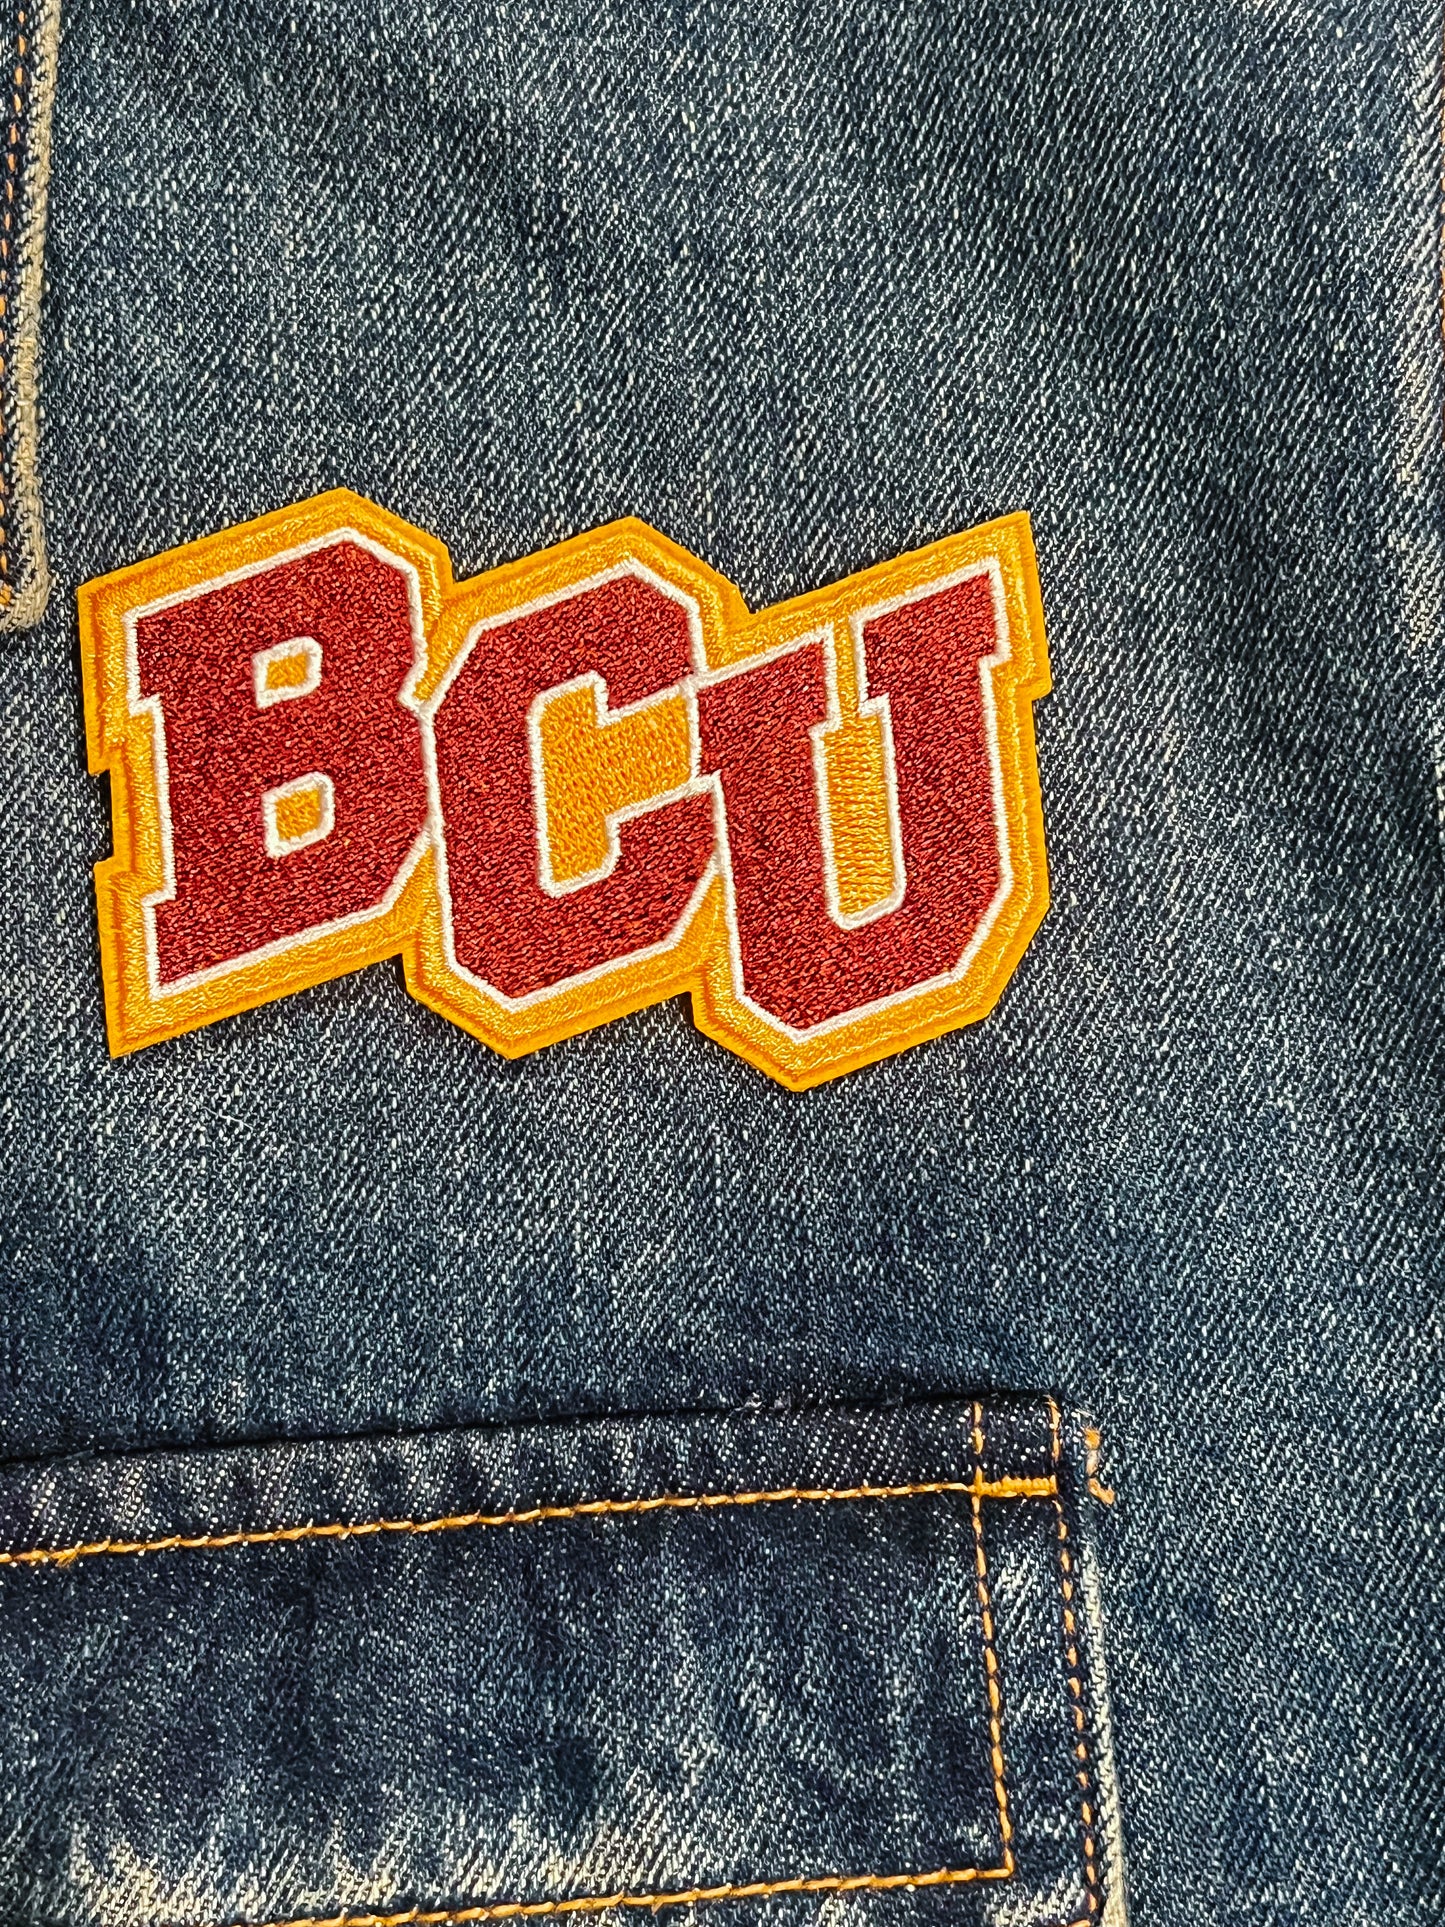 BCU (Bethune Cookman)University Iron On Patch